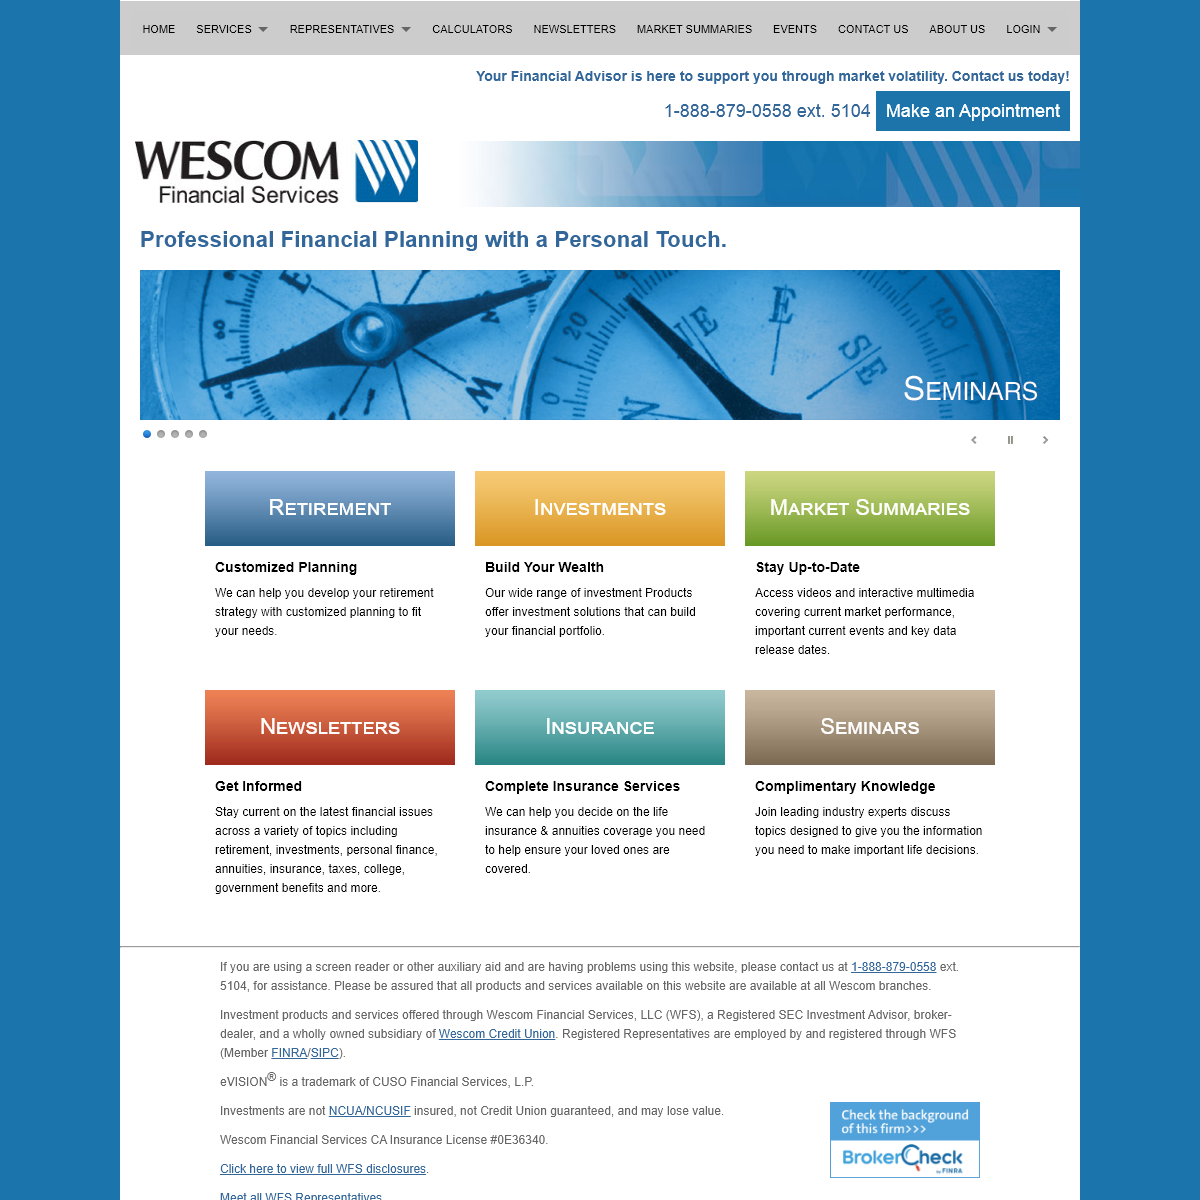 A complete backup of wescomfinancial.com